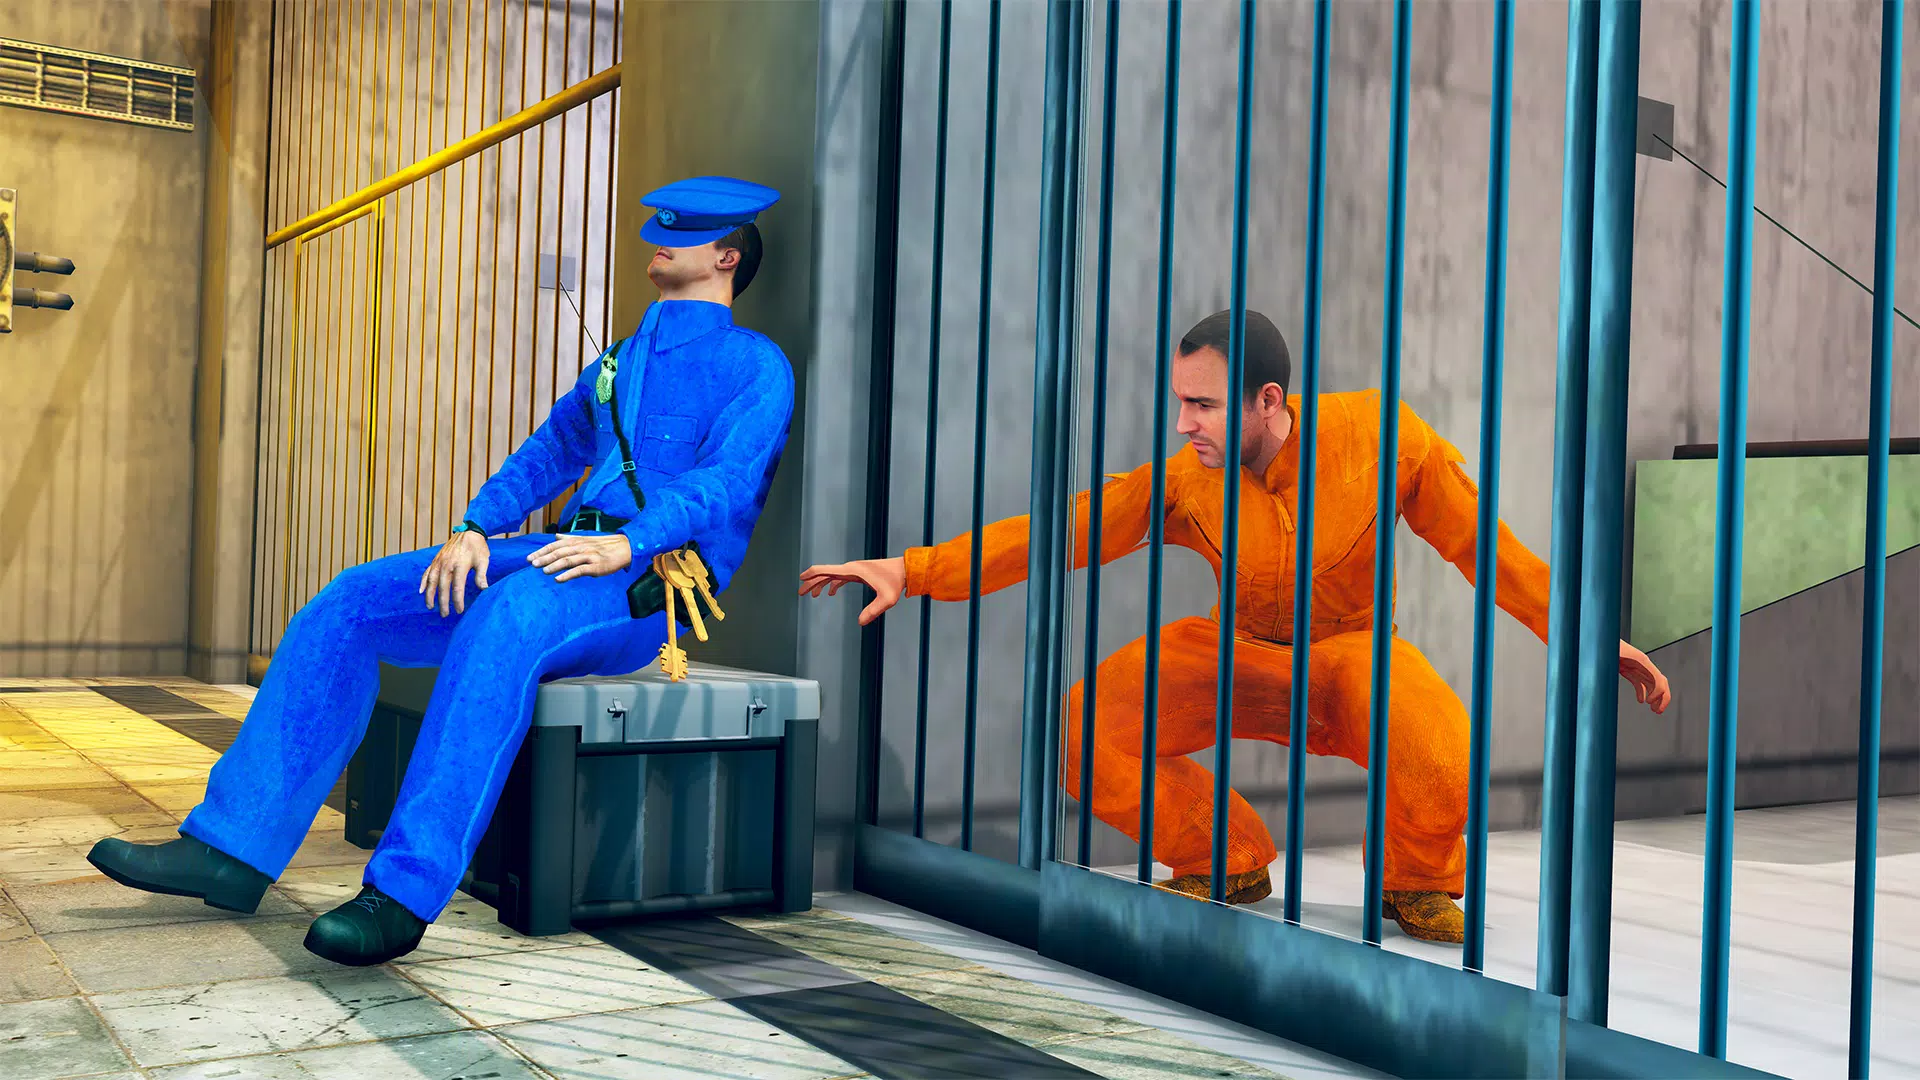 Jail Break : Cops Vs Robbers Walkthrough Part 4 / Android Gameplay HD 